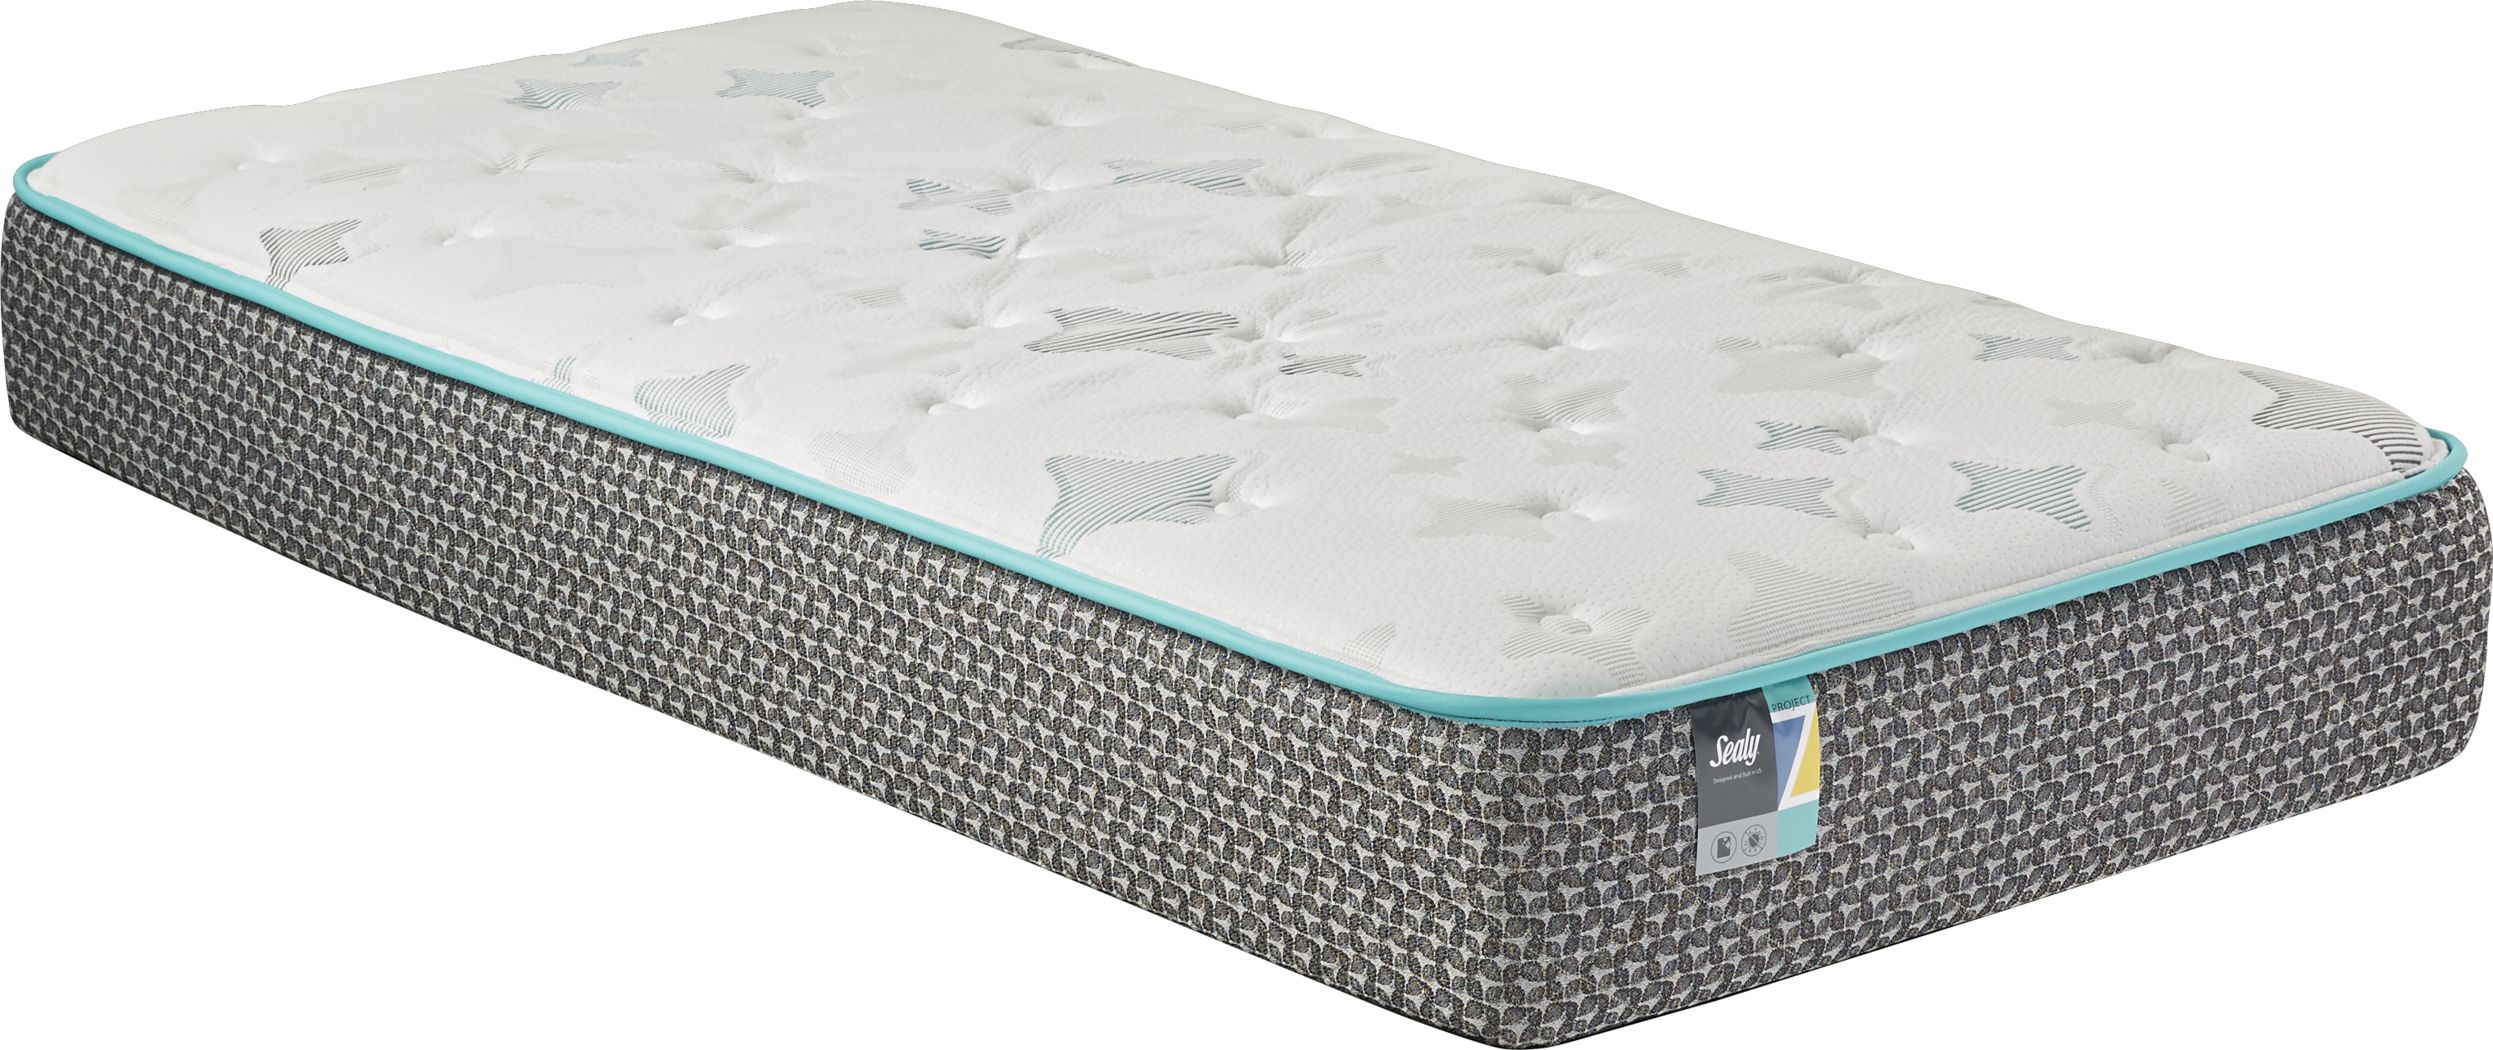 sealy tritech air mattress twin